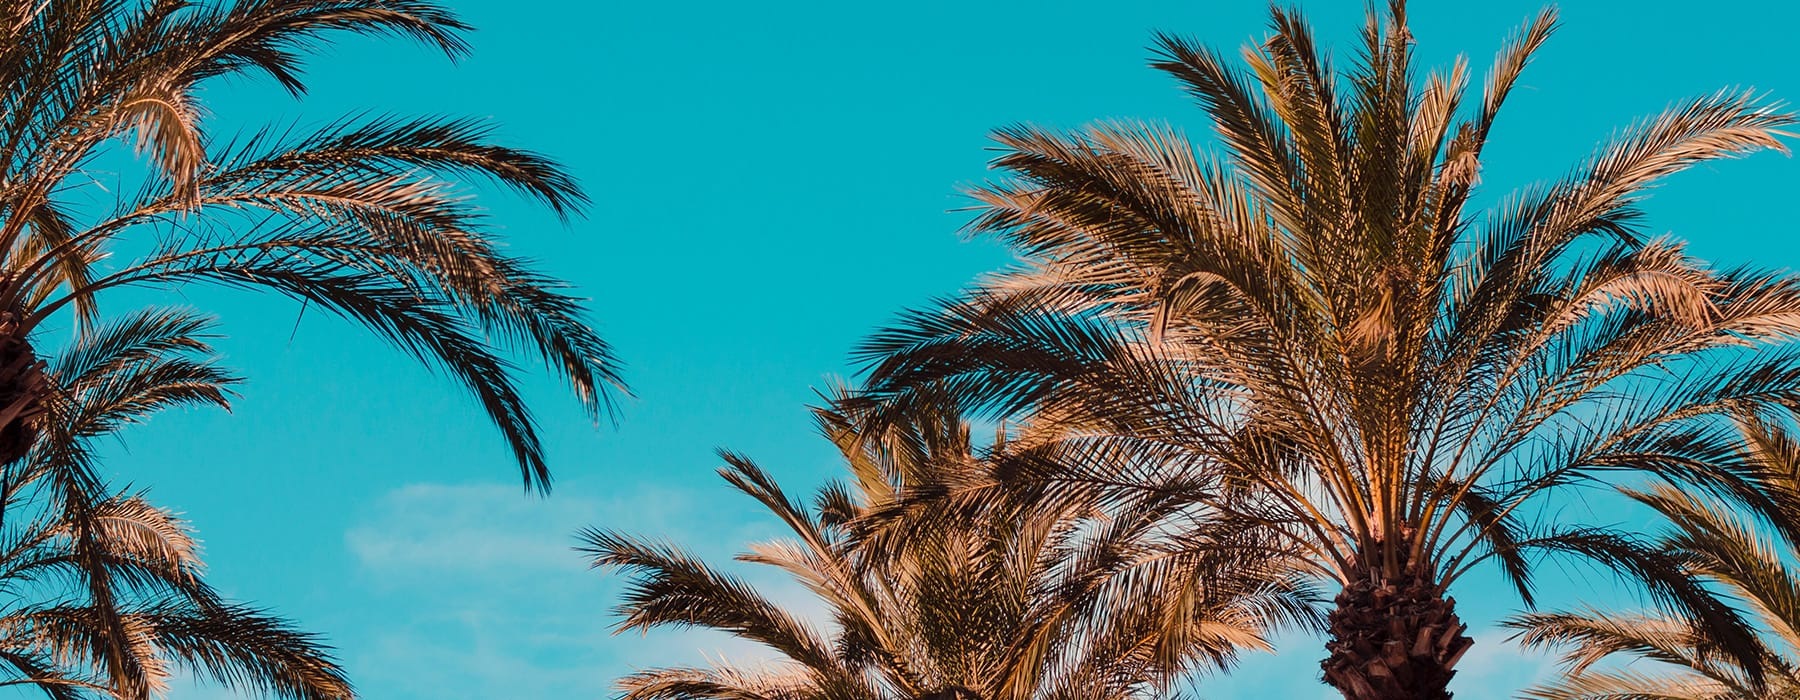 lifestyle image of palm trees